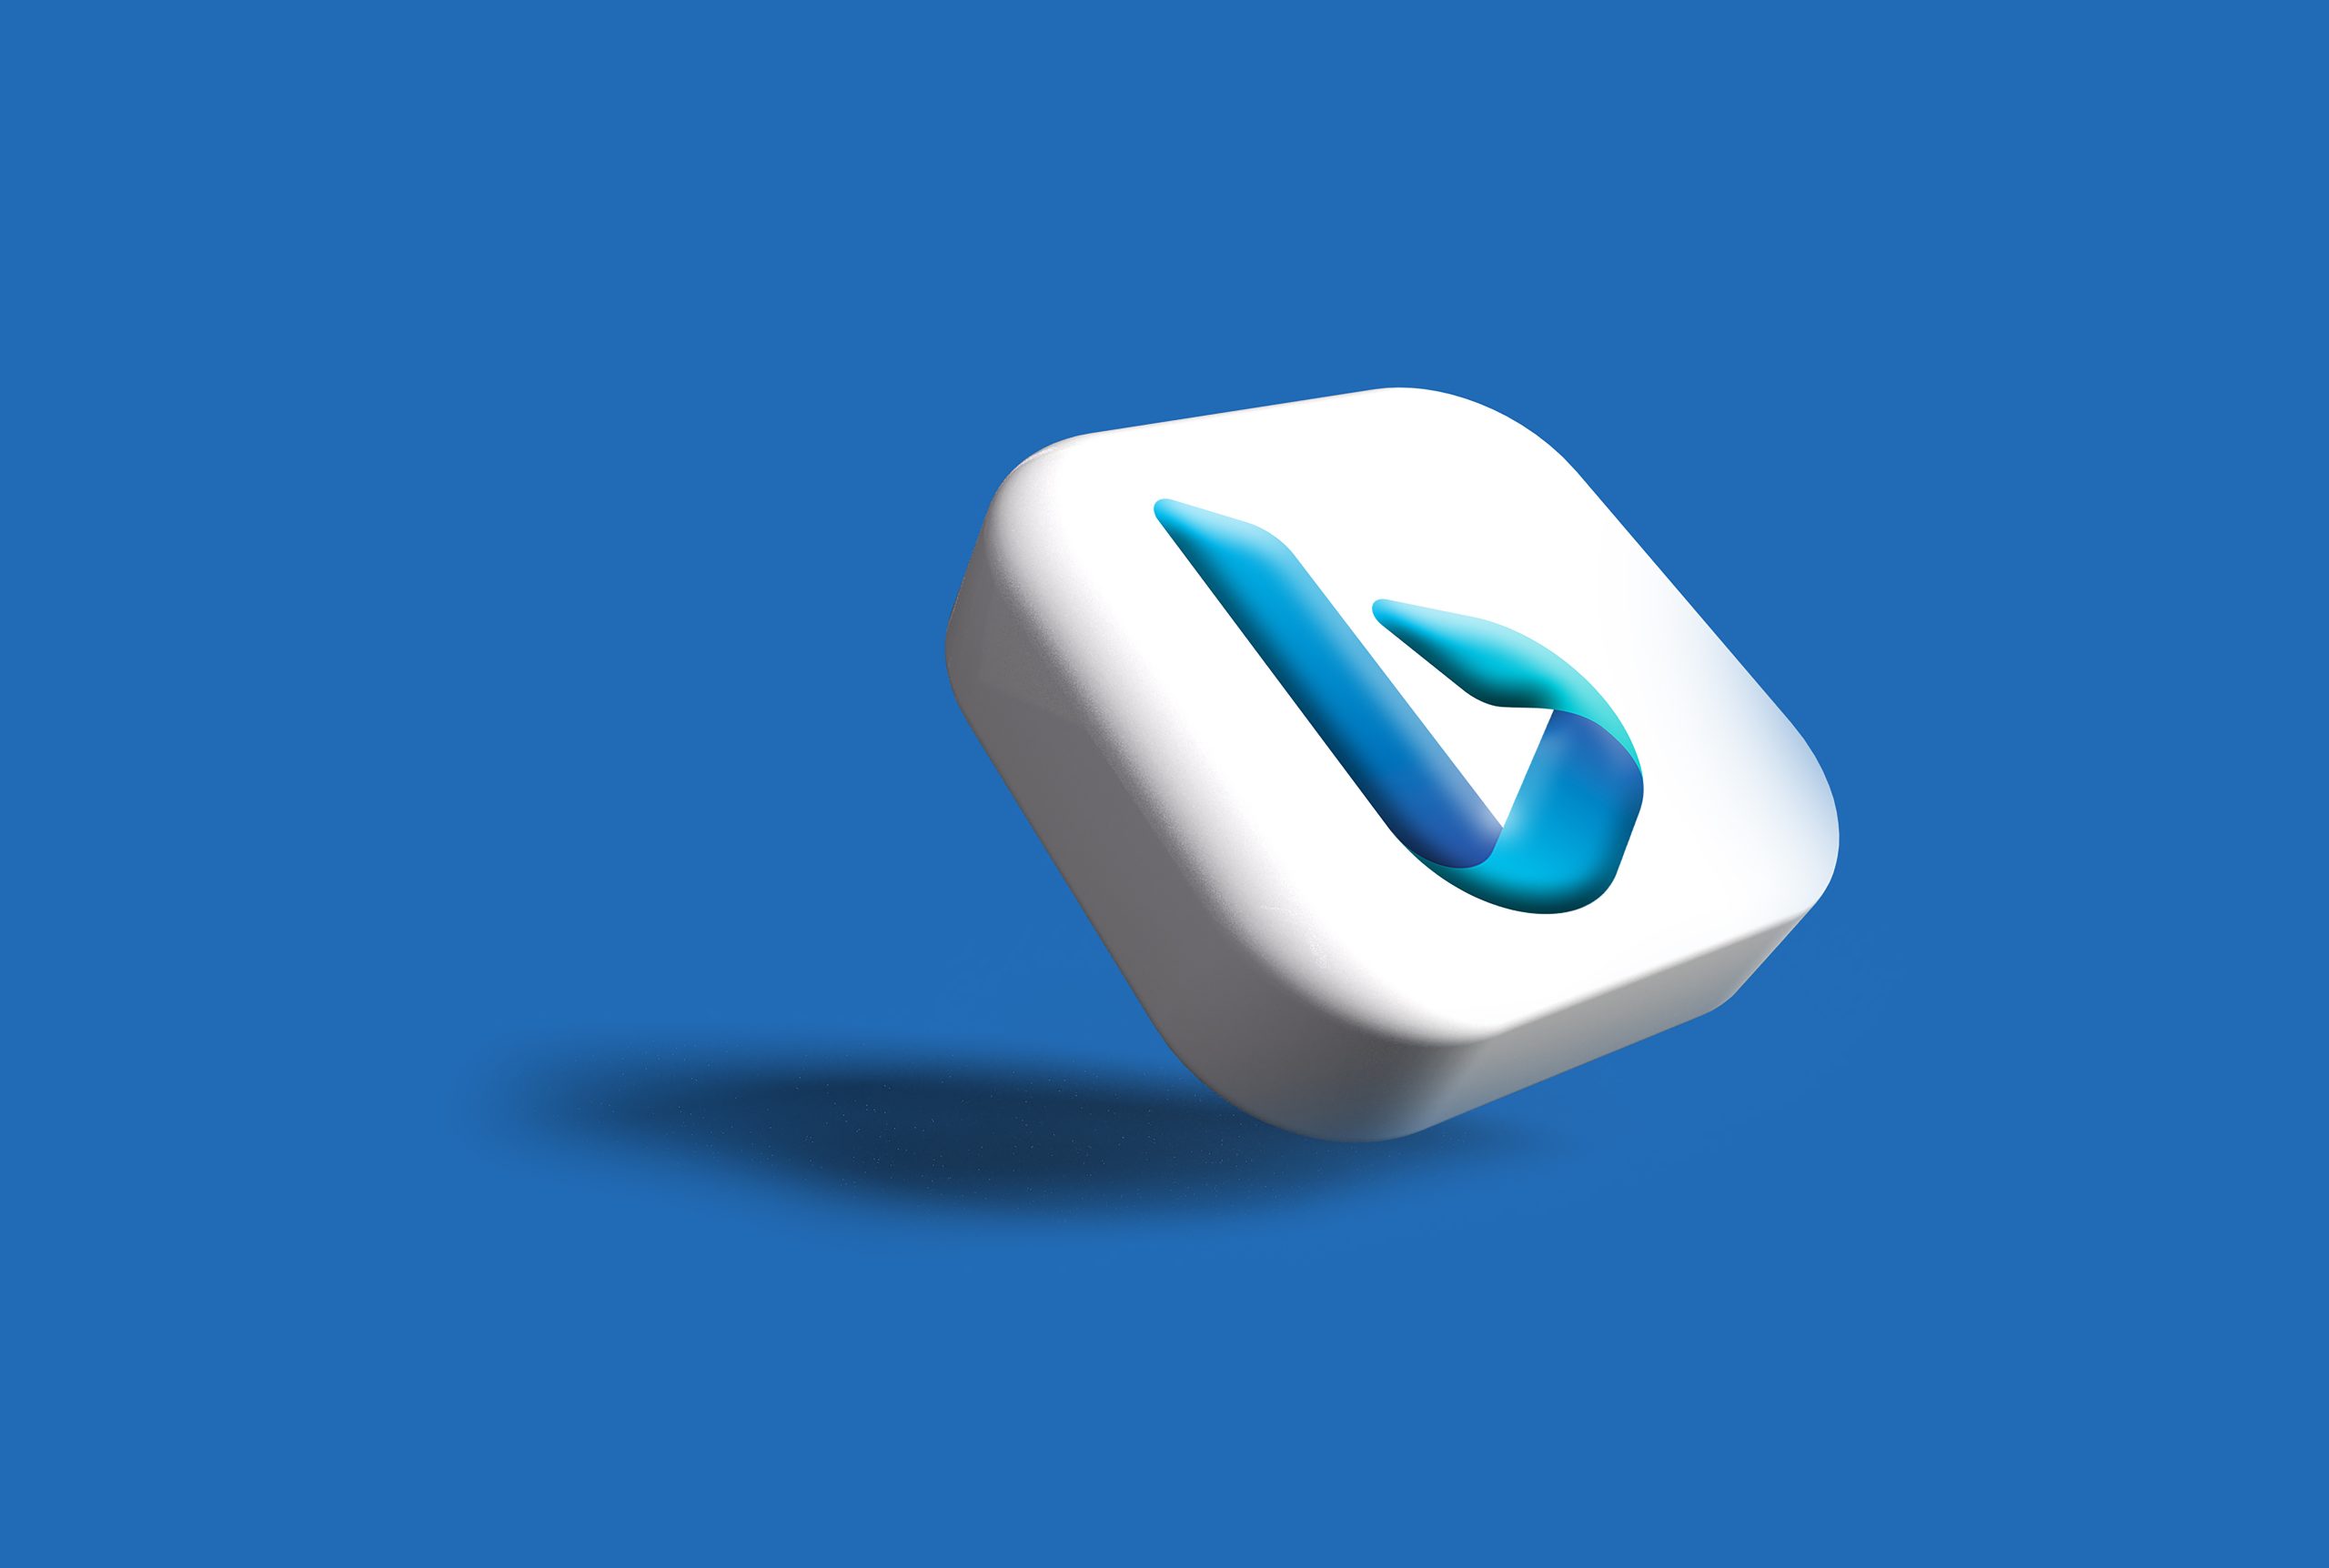 Bing logo on a blue background